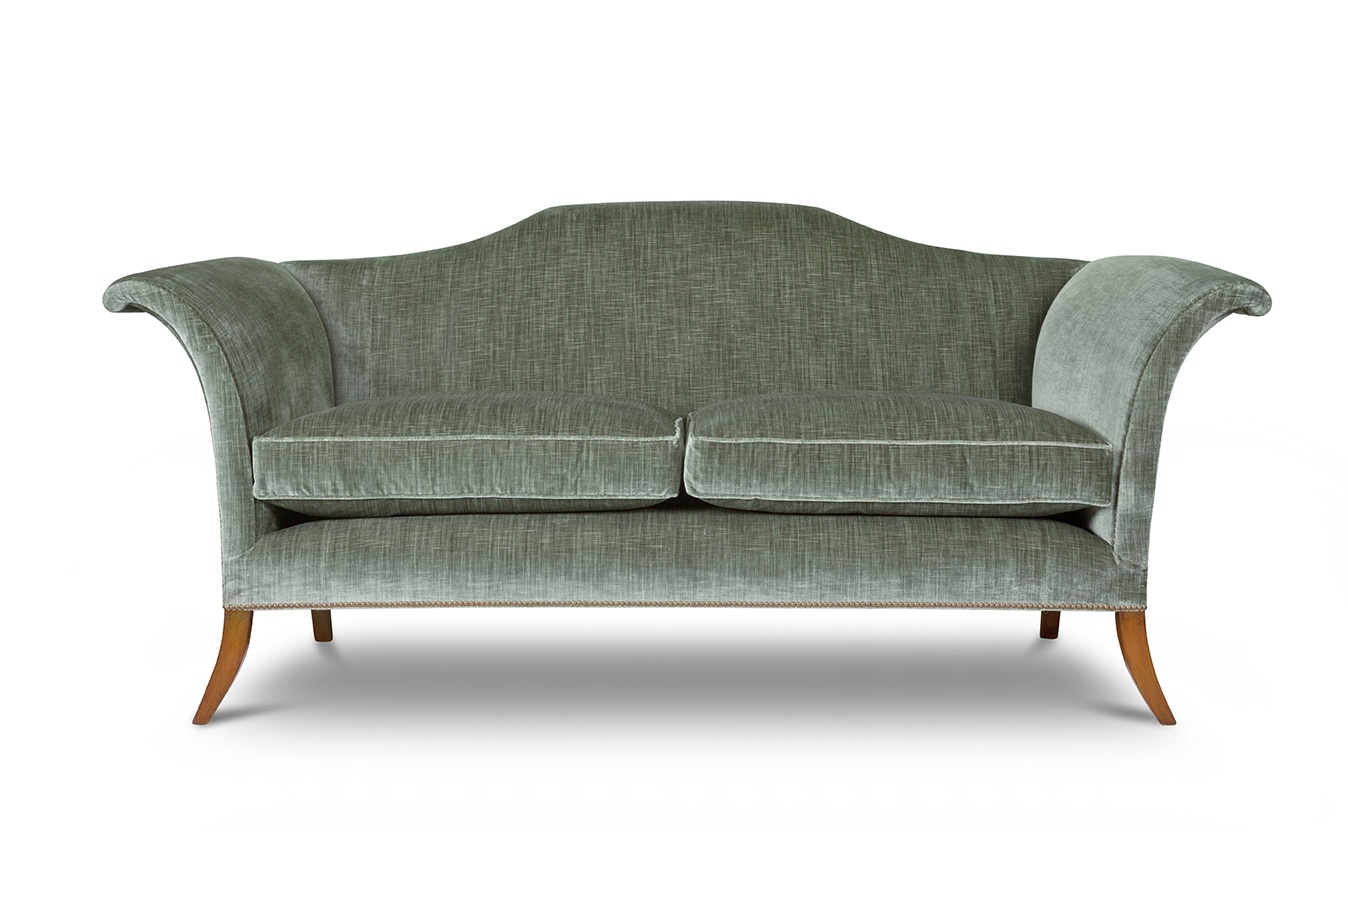 Clarence sofa in Como - Moss - Beaumont & Fletcher